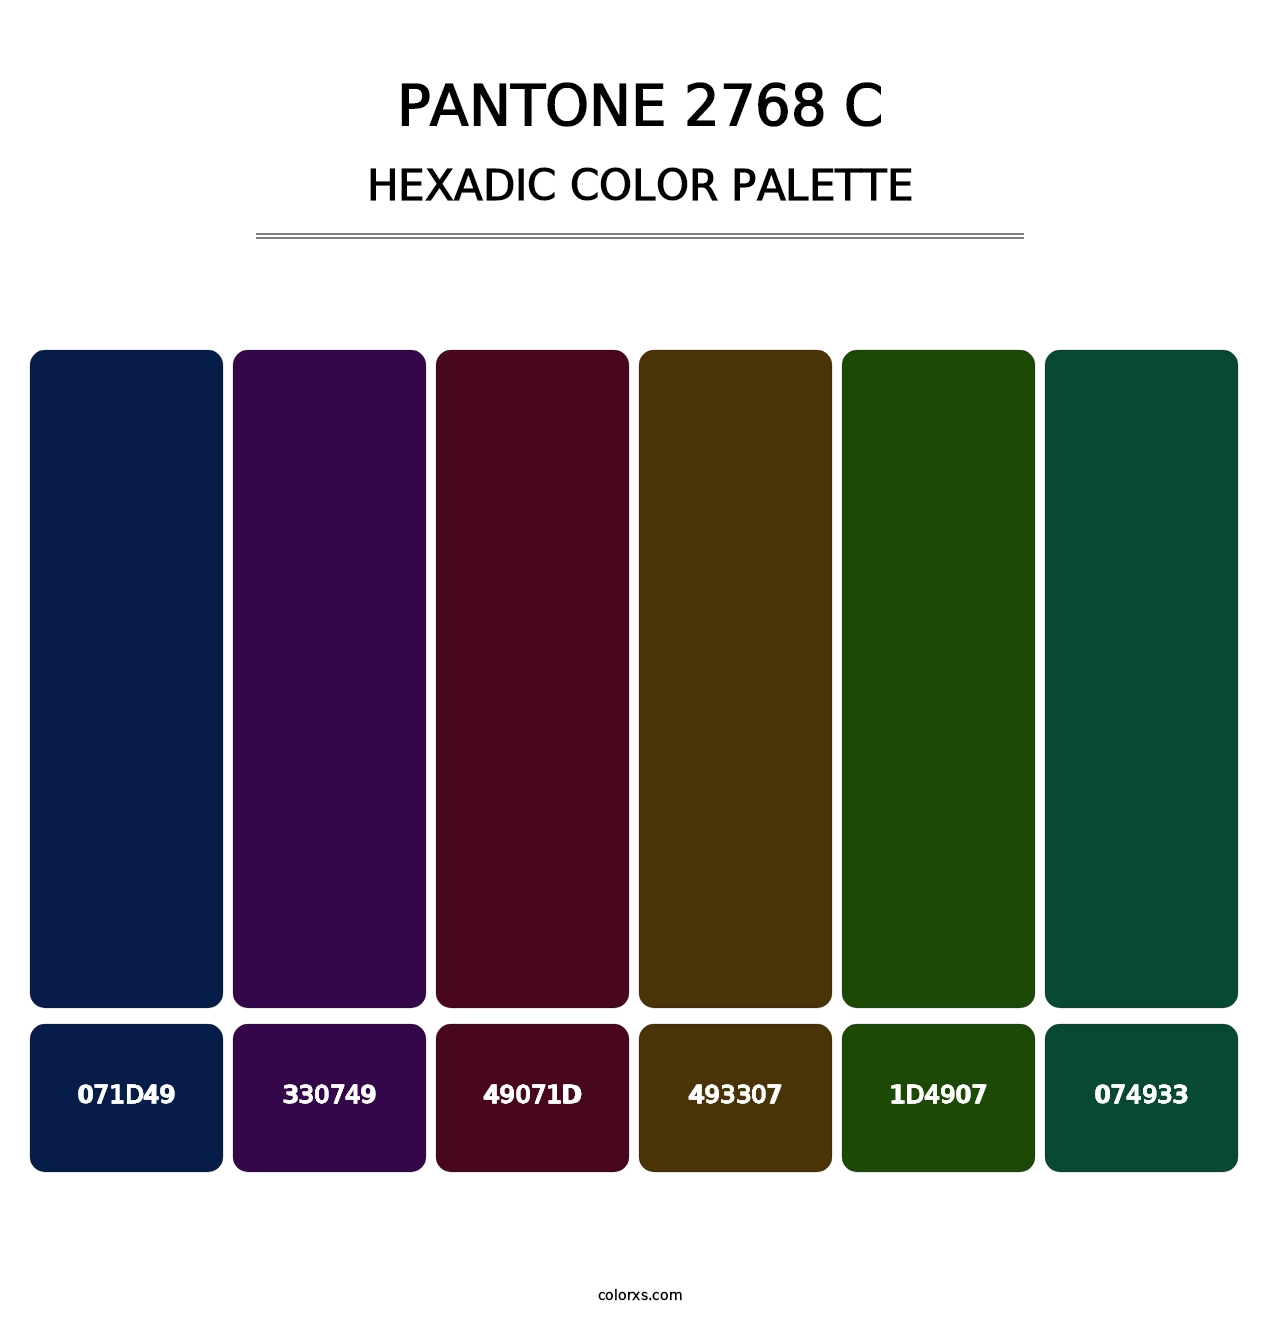 PANTONE 2768 C - Hexadic Color Palette